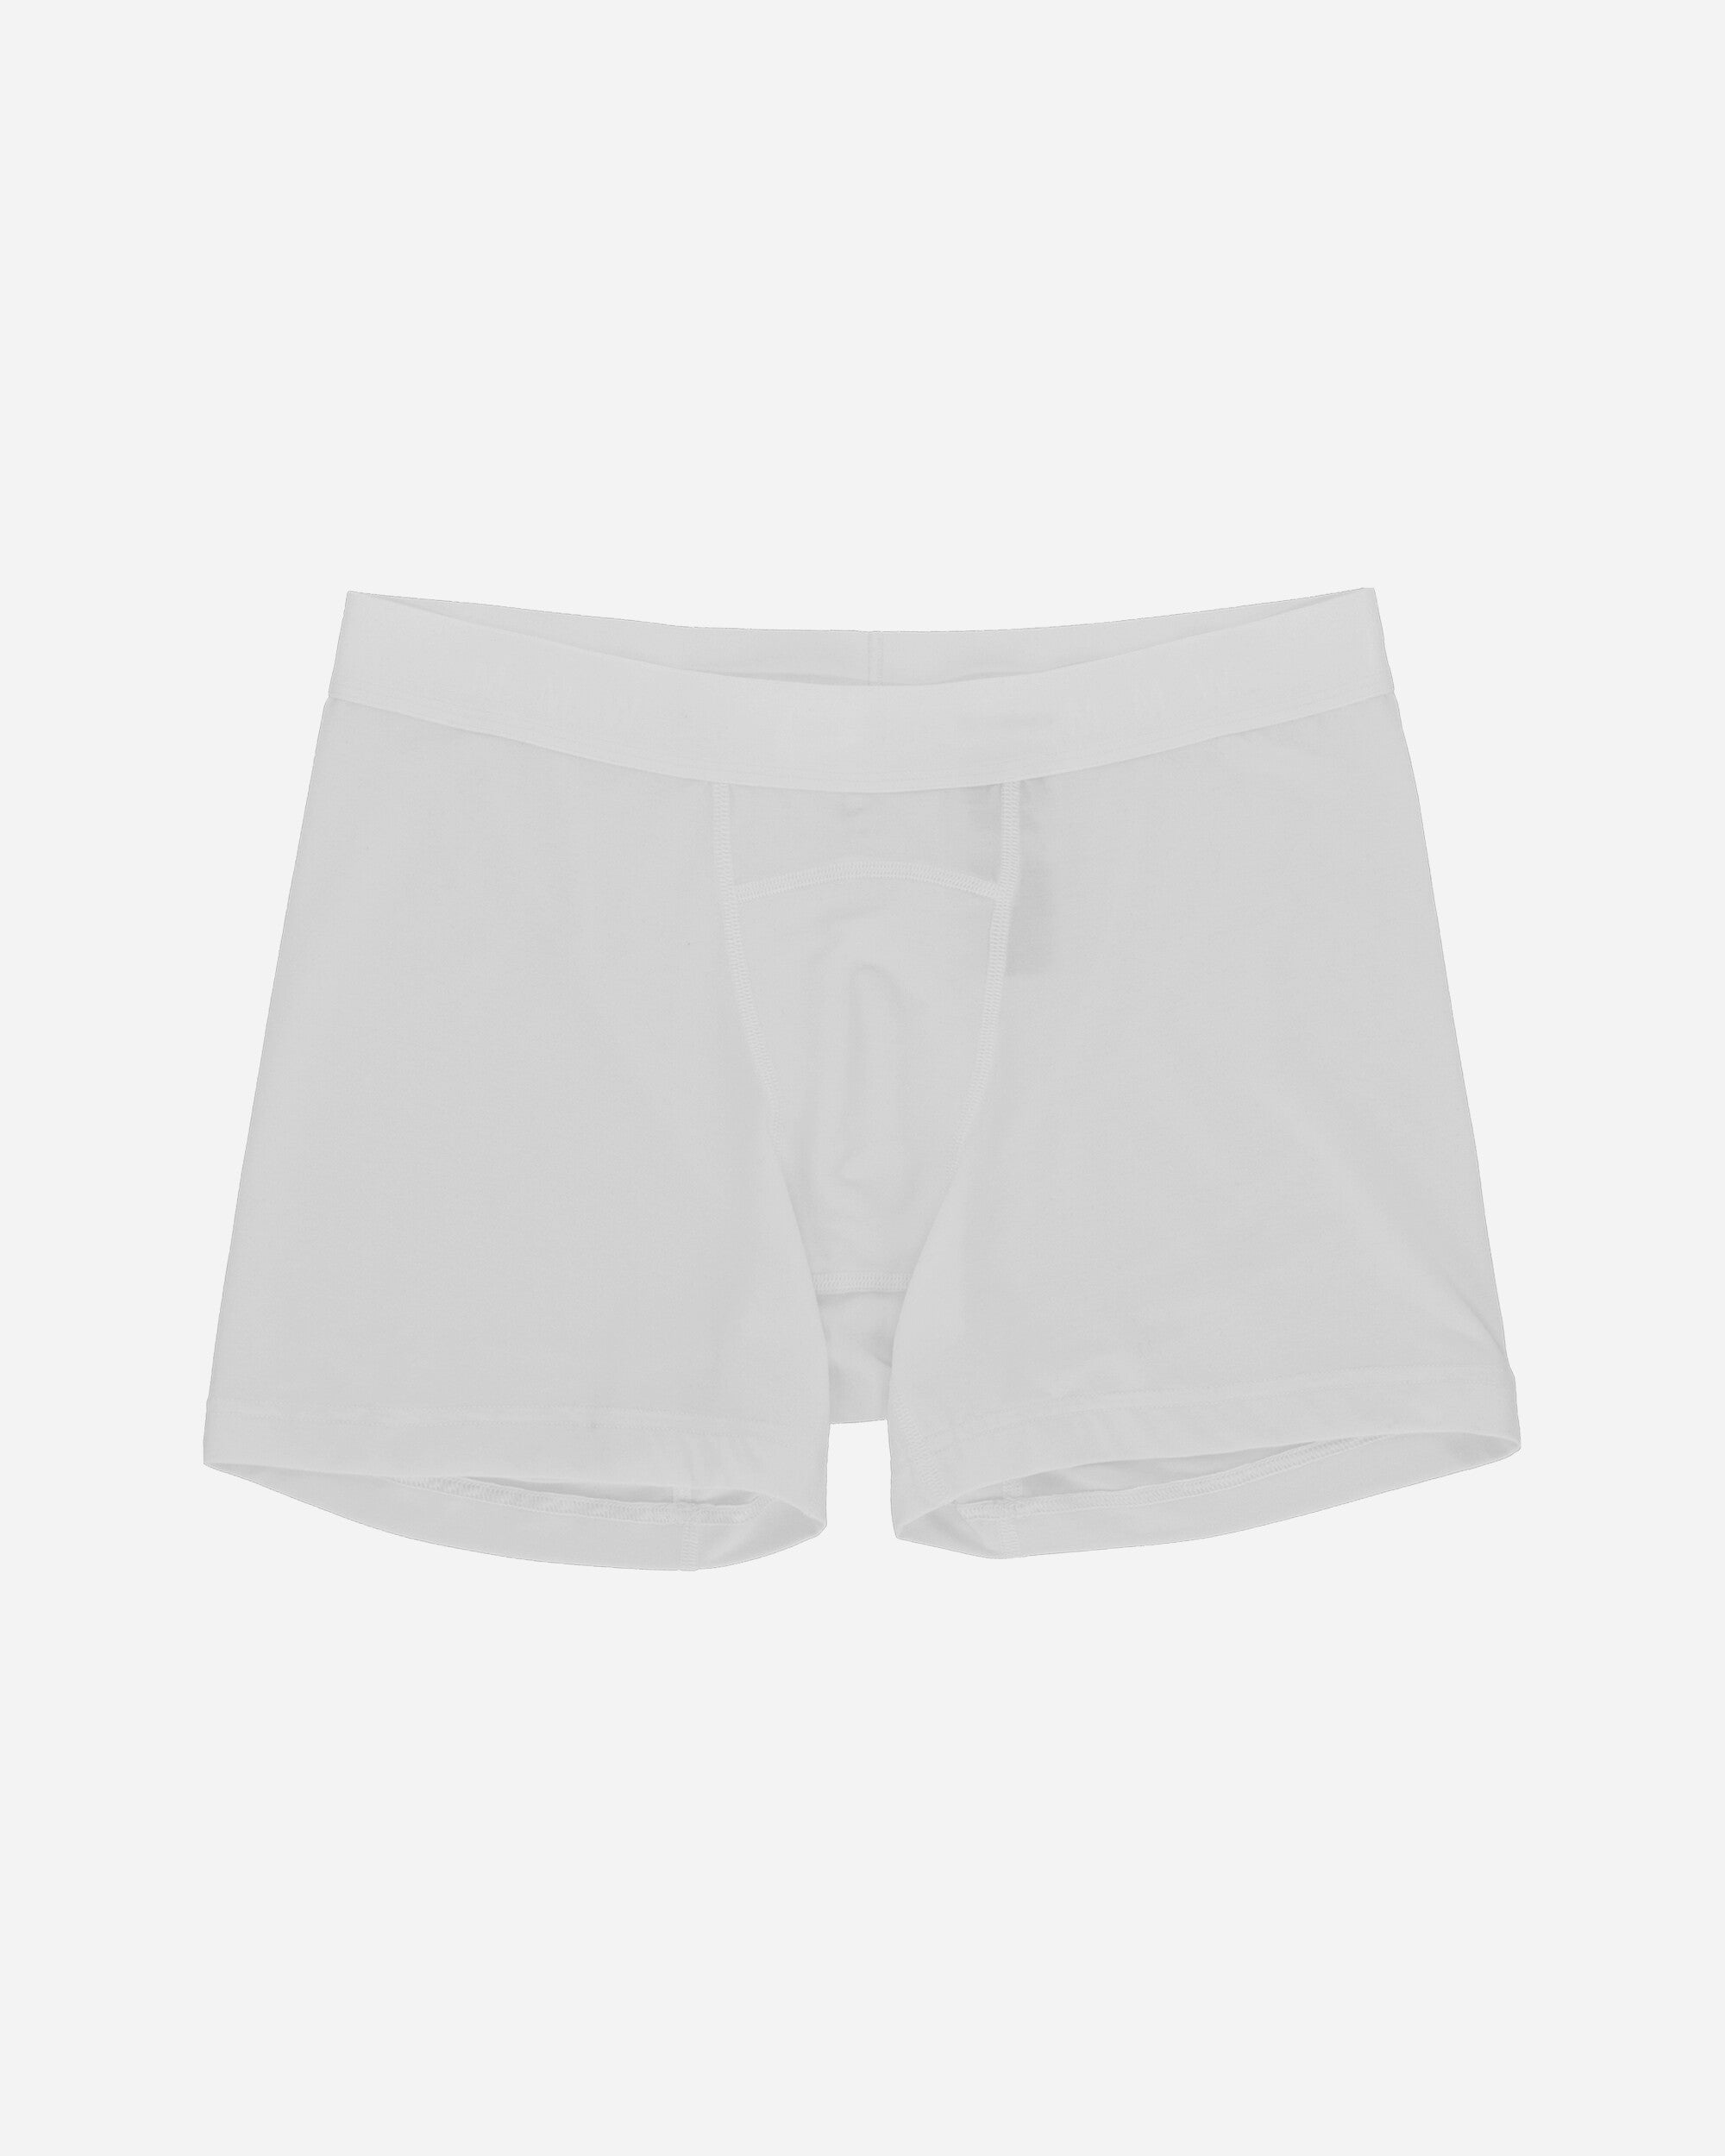 Nike Nrg X Se White Underwear Boxers CK1542-100